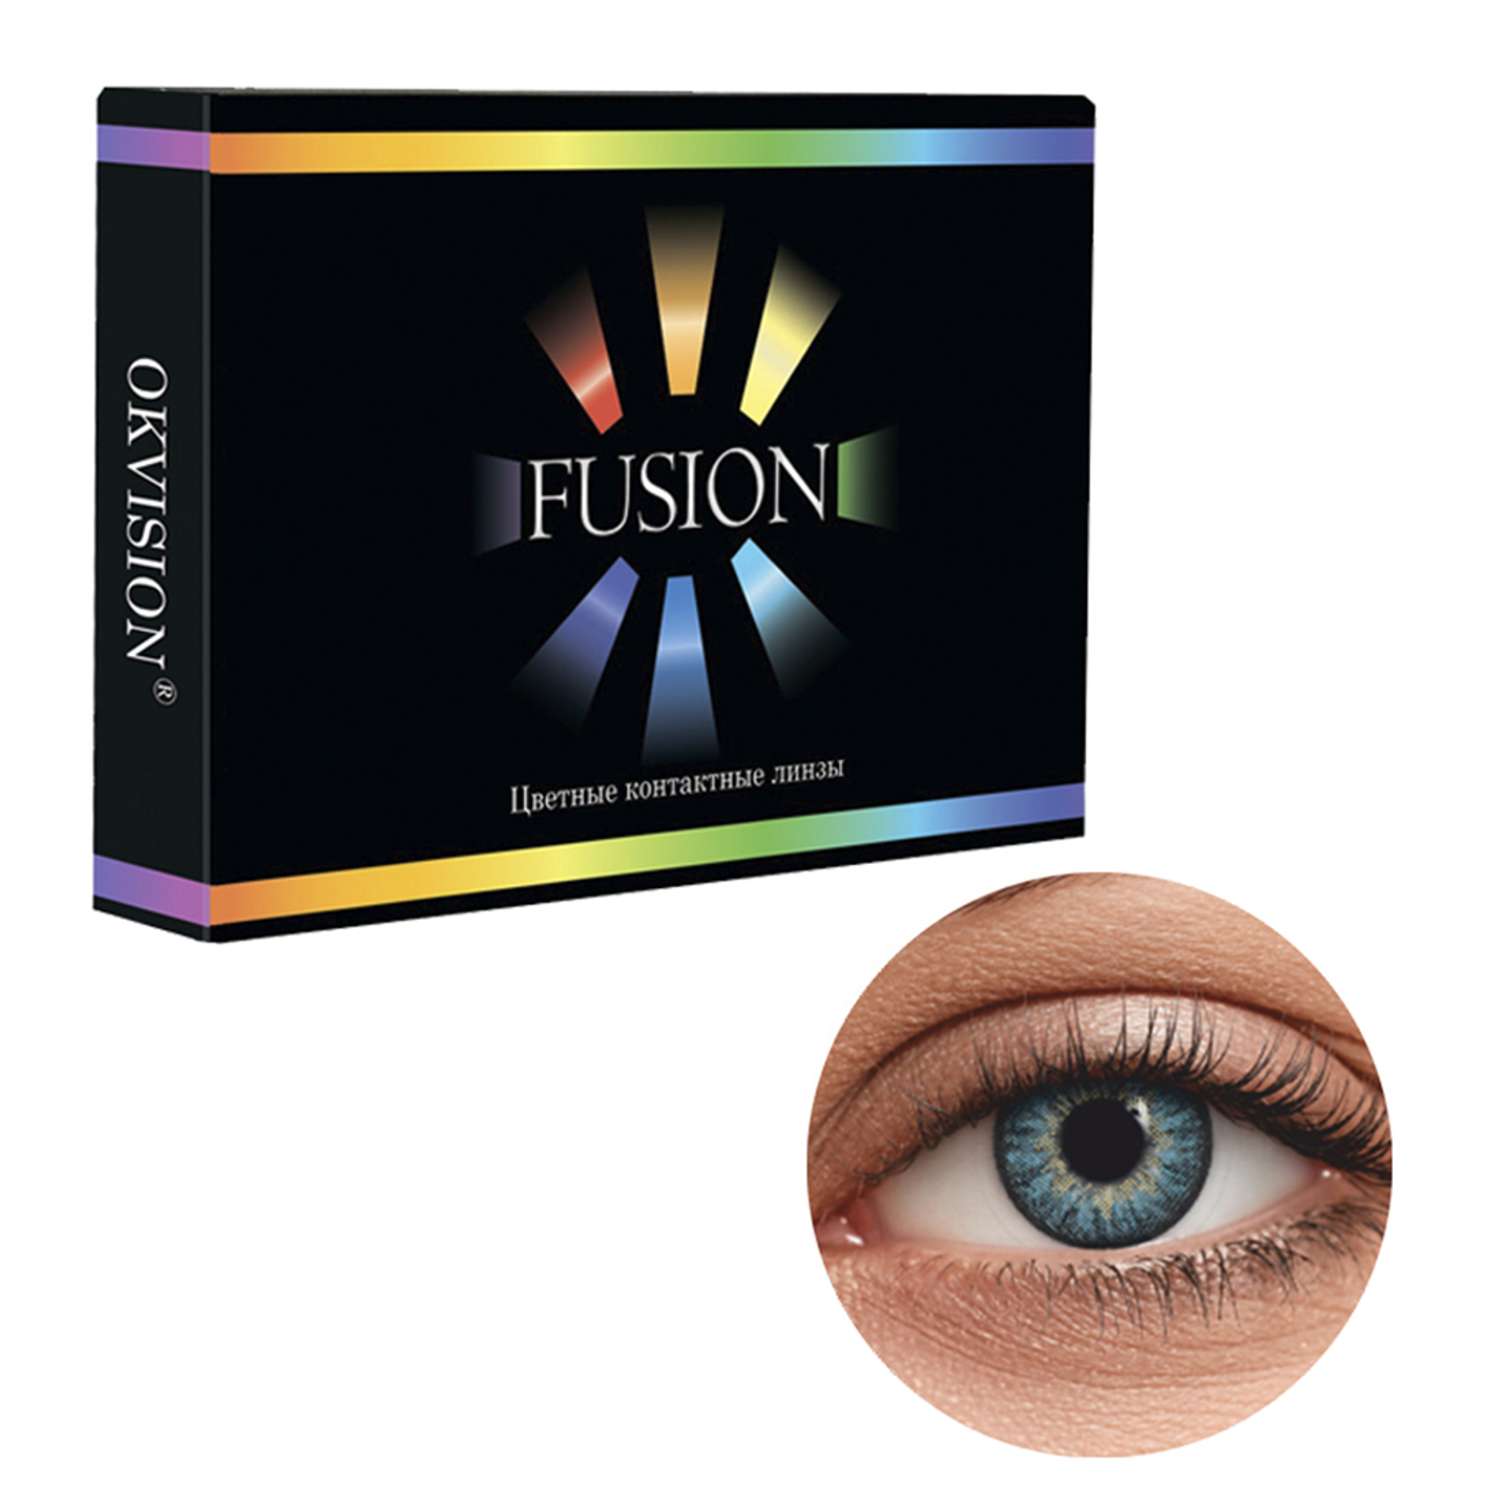 Цветные контактные линзы OKVision Fusion monthly R 8.6 -4.50 цвет Sky Blue 2 шт 1 месяц - фото 1